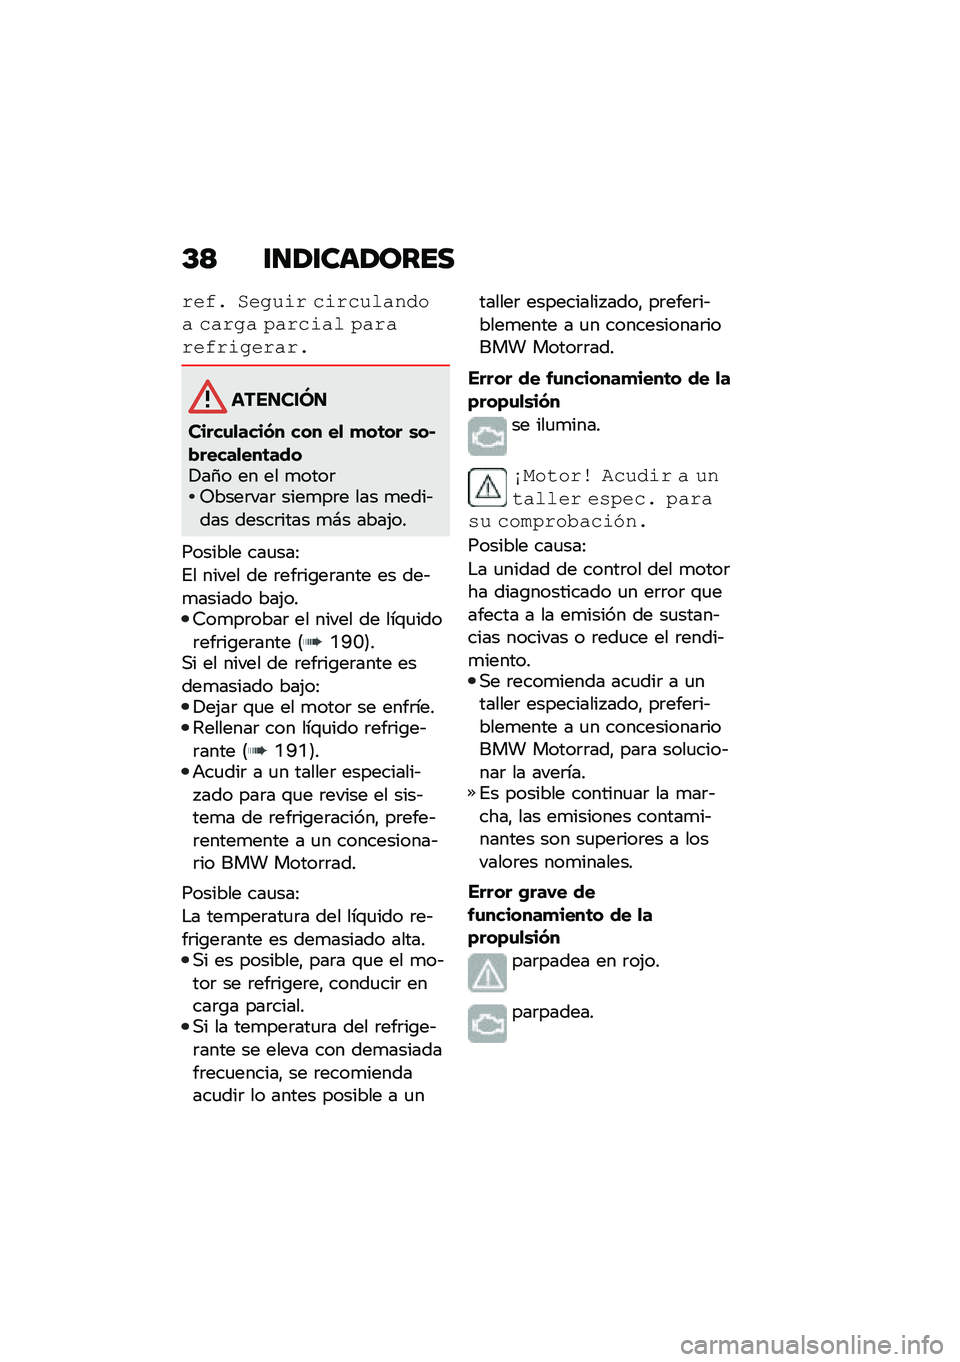 BMW MOTORRAD M 1000 RR 2021  Manual de instrucciones (in Spanish) �D�> �\f�
�1�\f���1����
���*�  �/��
��\f� ��\f��������� ����
� �(����\f�� �(������*��\f�
����� 
��������
�����\f�
����� ��� ��
 �
��	�� 